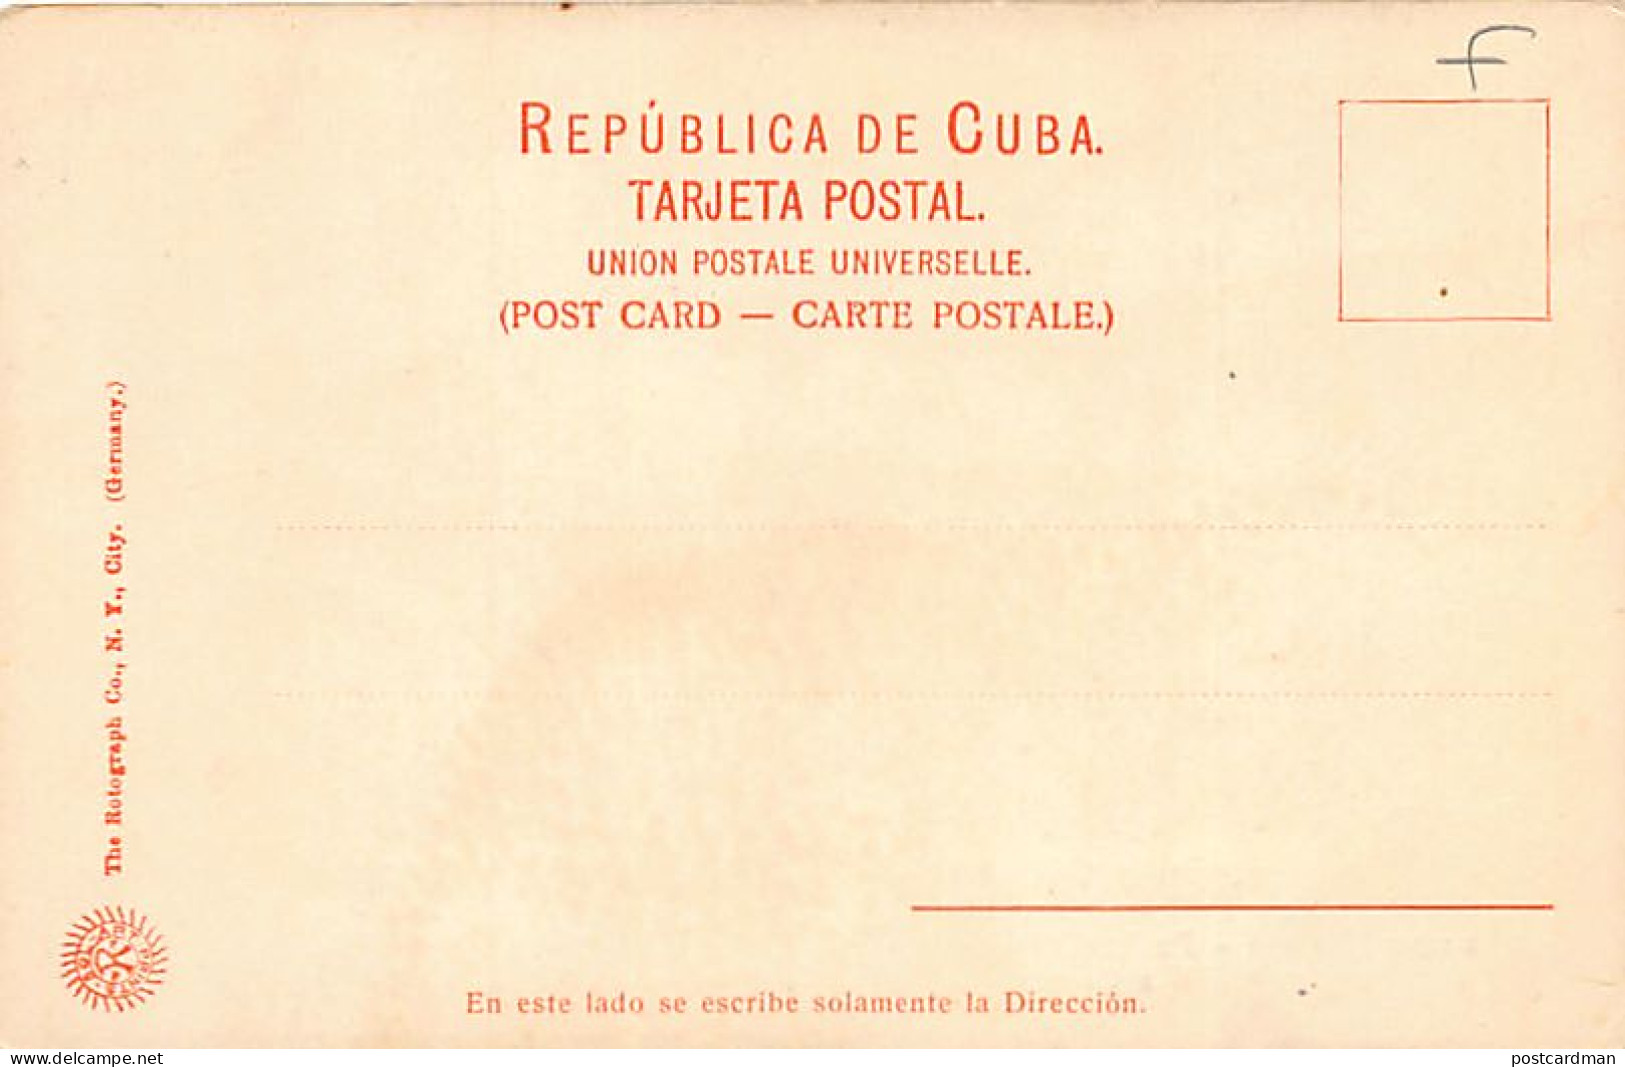 Cuba - LA HABANA - Une Carreta Ed. The Rotograph Co. 12042 - Kuba